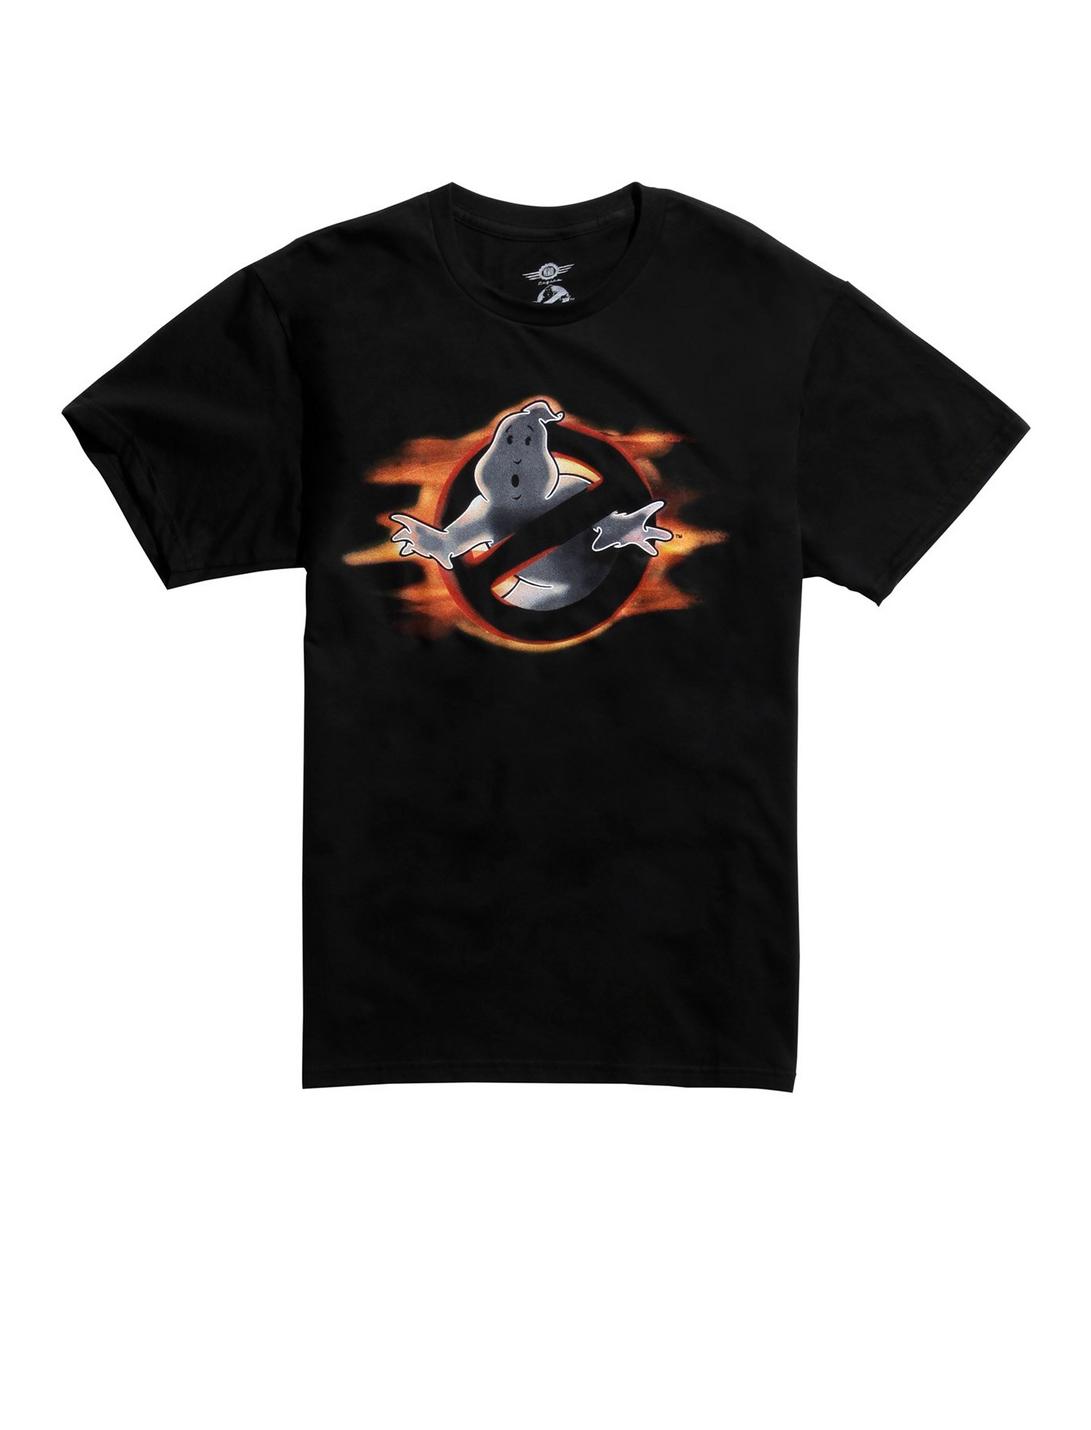 Ghostbusters Dark Logo T-Shirt, BLACK, hi-res